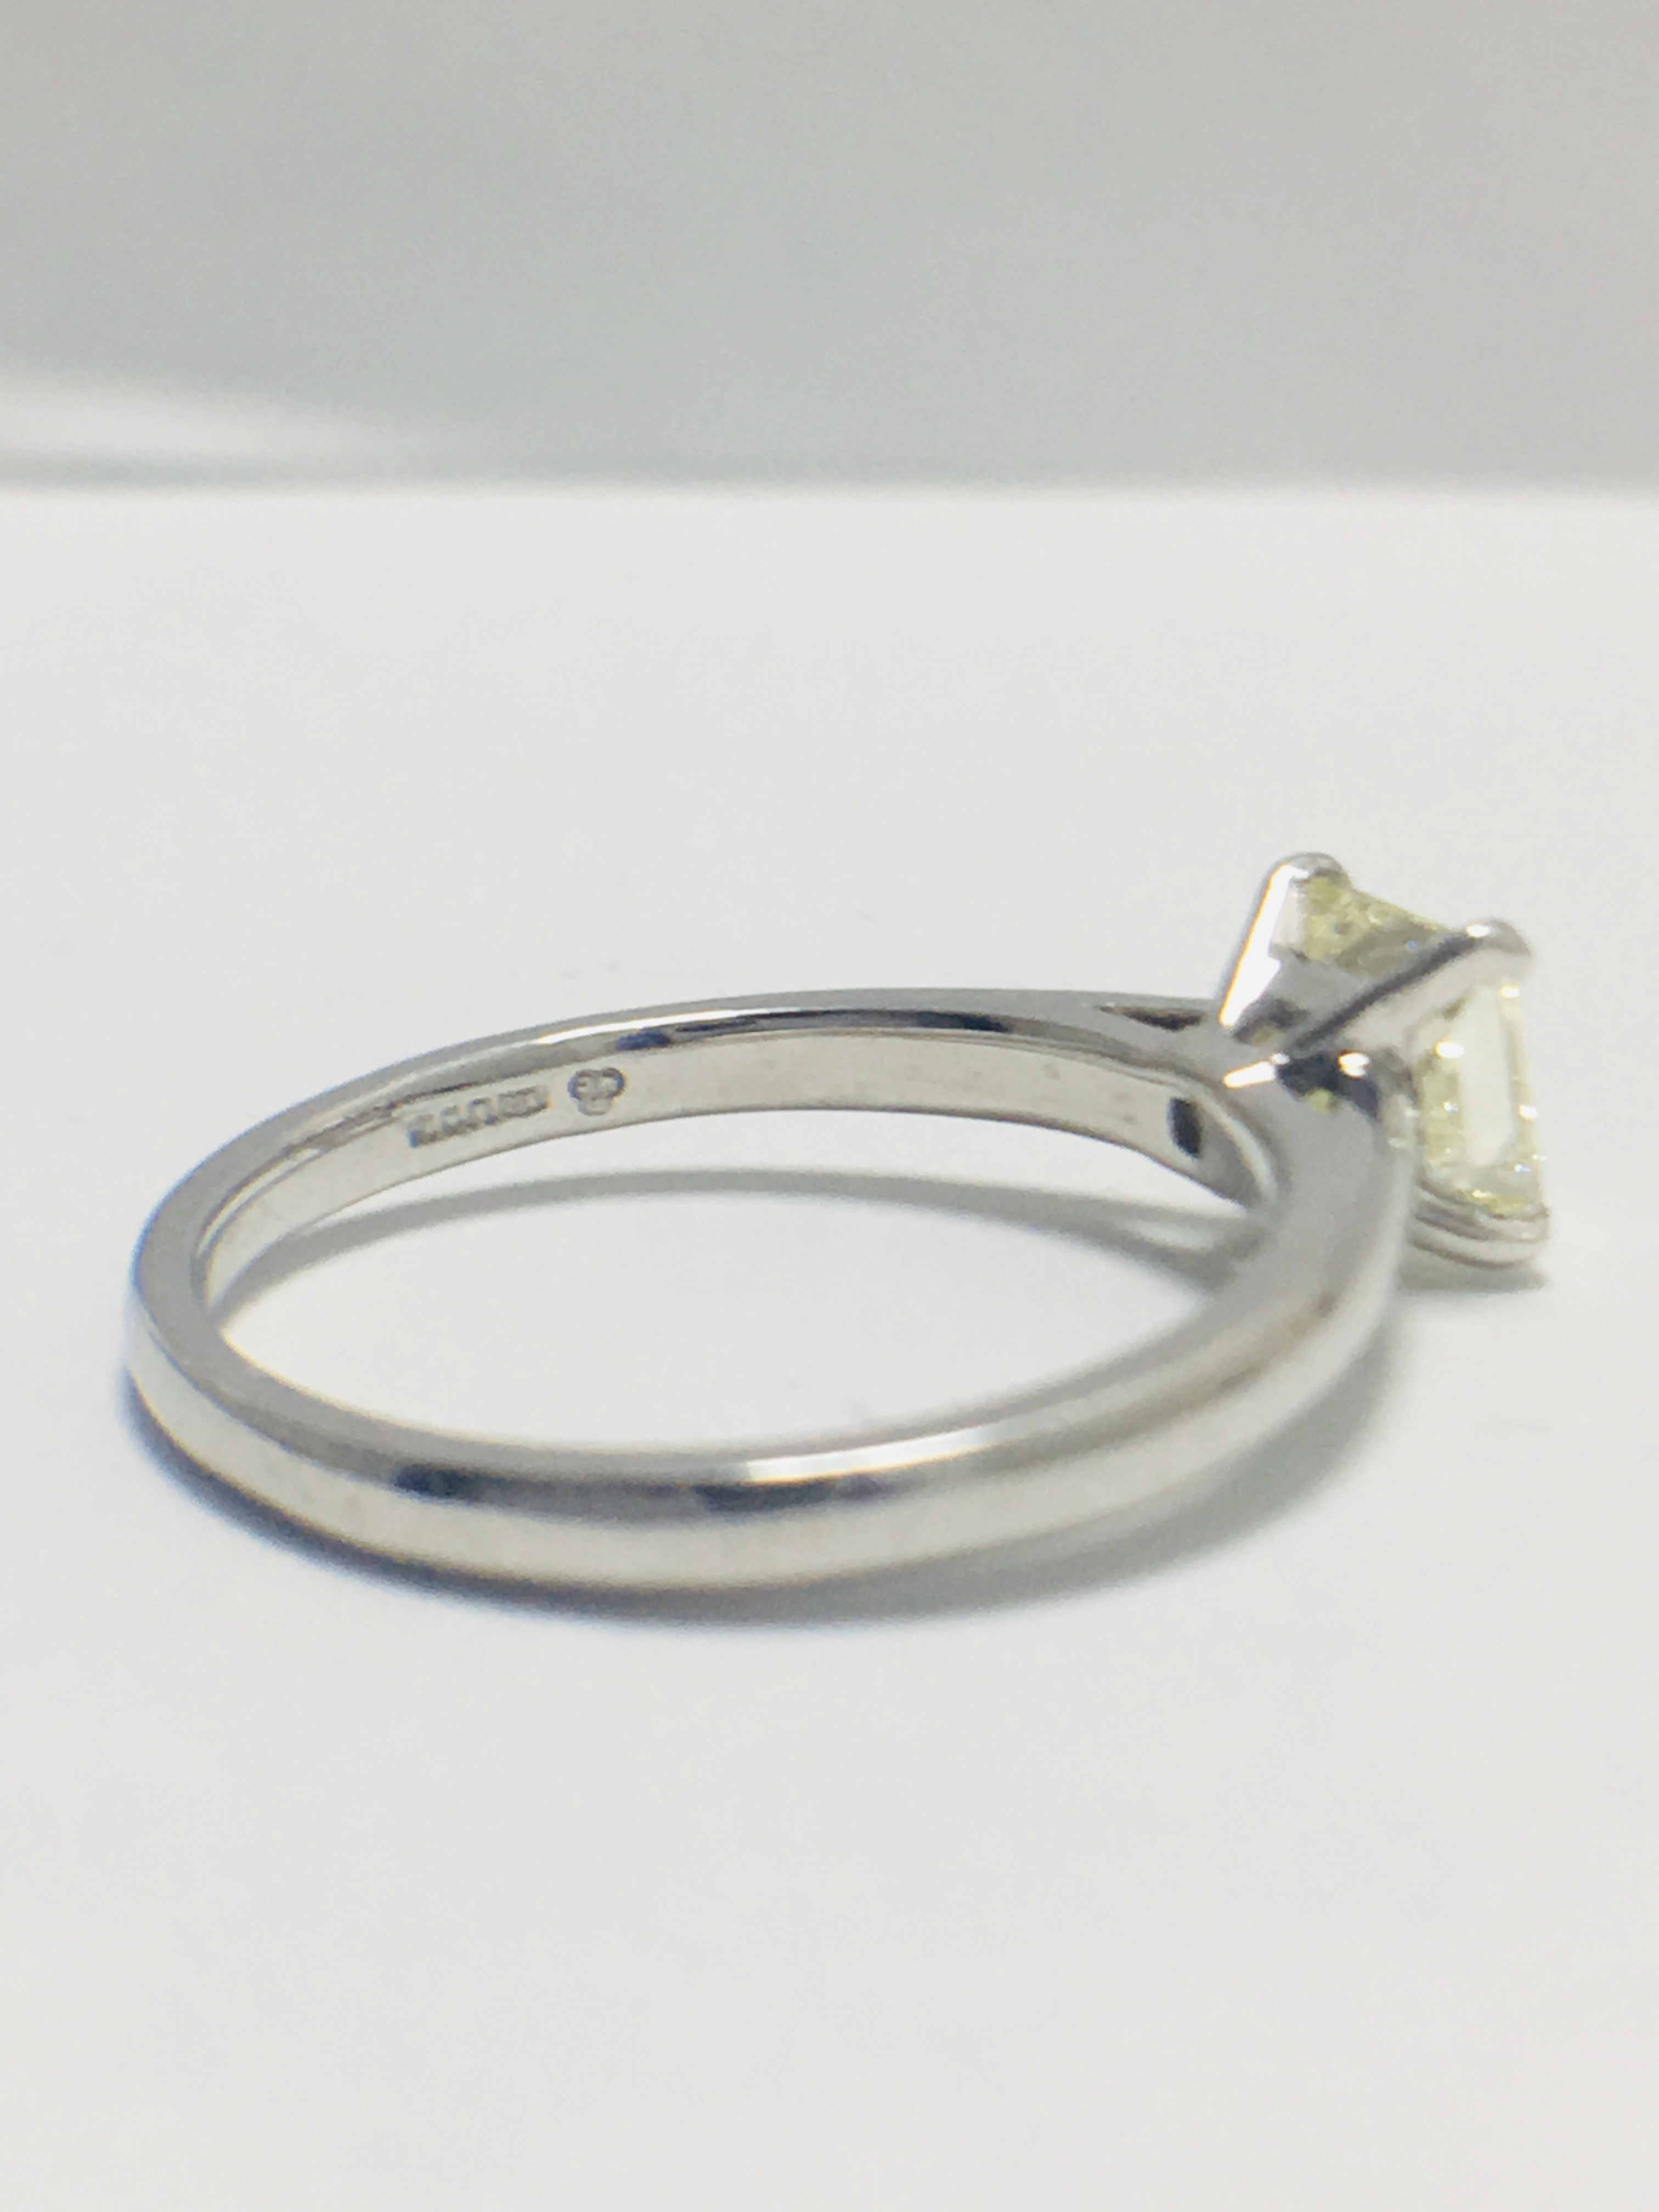 1ct Natural Princes Cut diamond platinum ring - Image 5 of 10